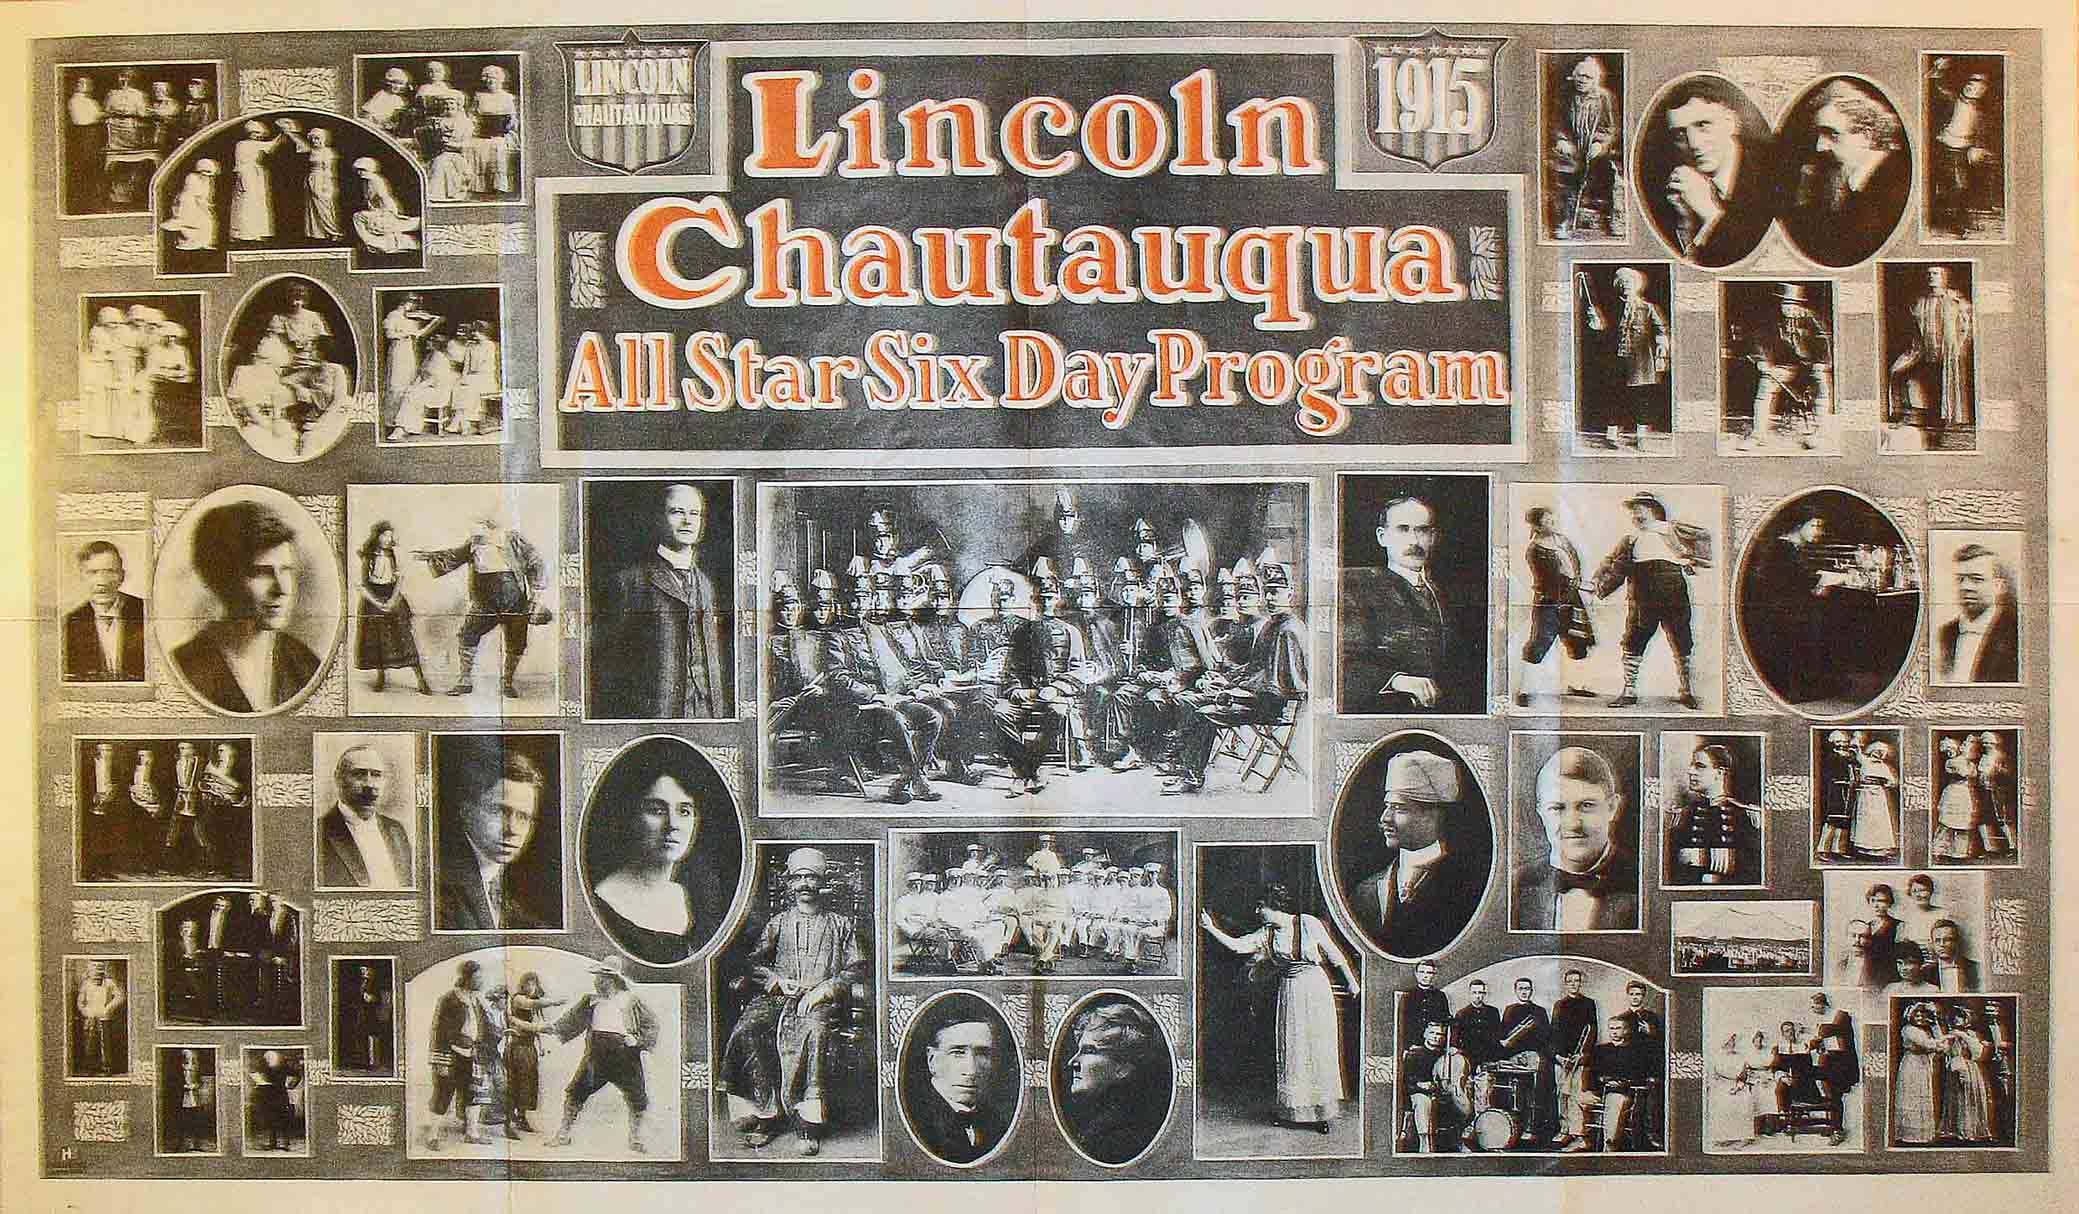 Large poster for the Lincoln Chautauqua program.